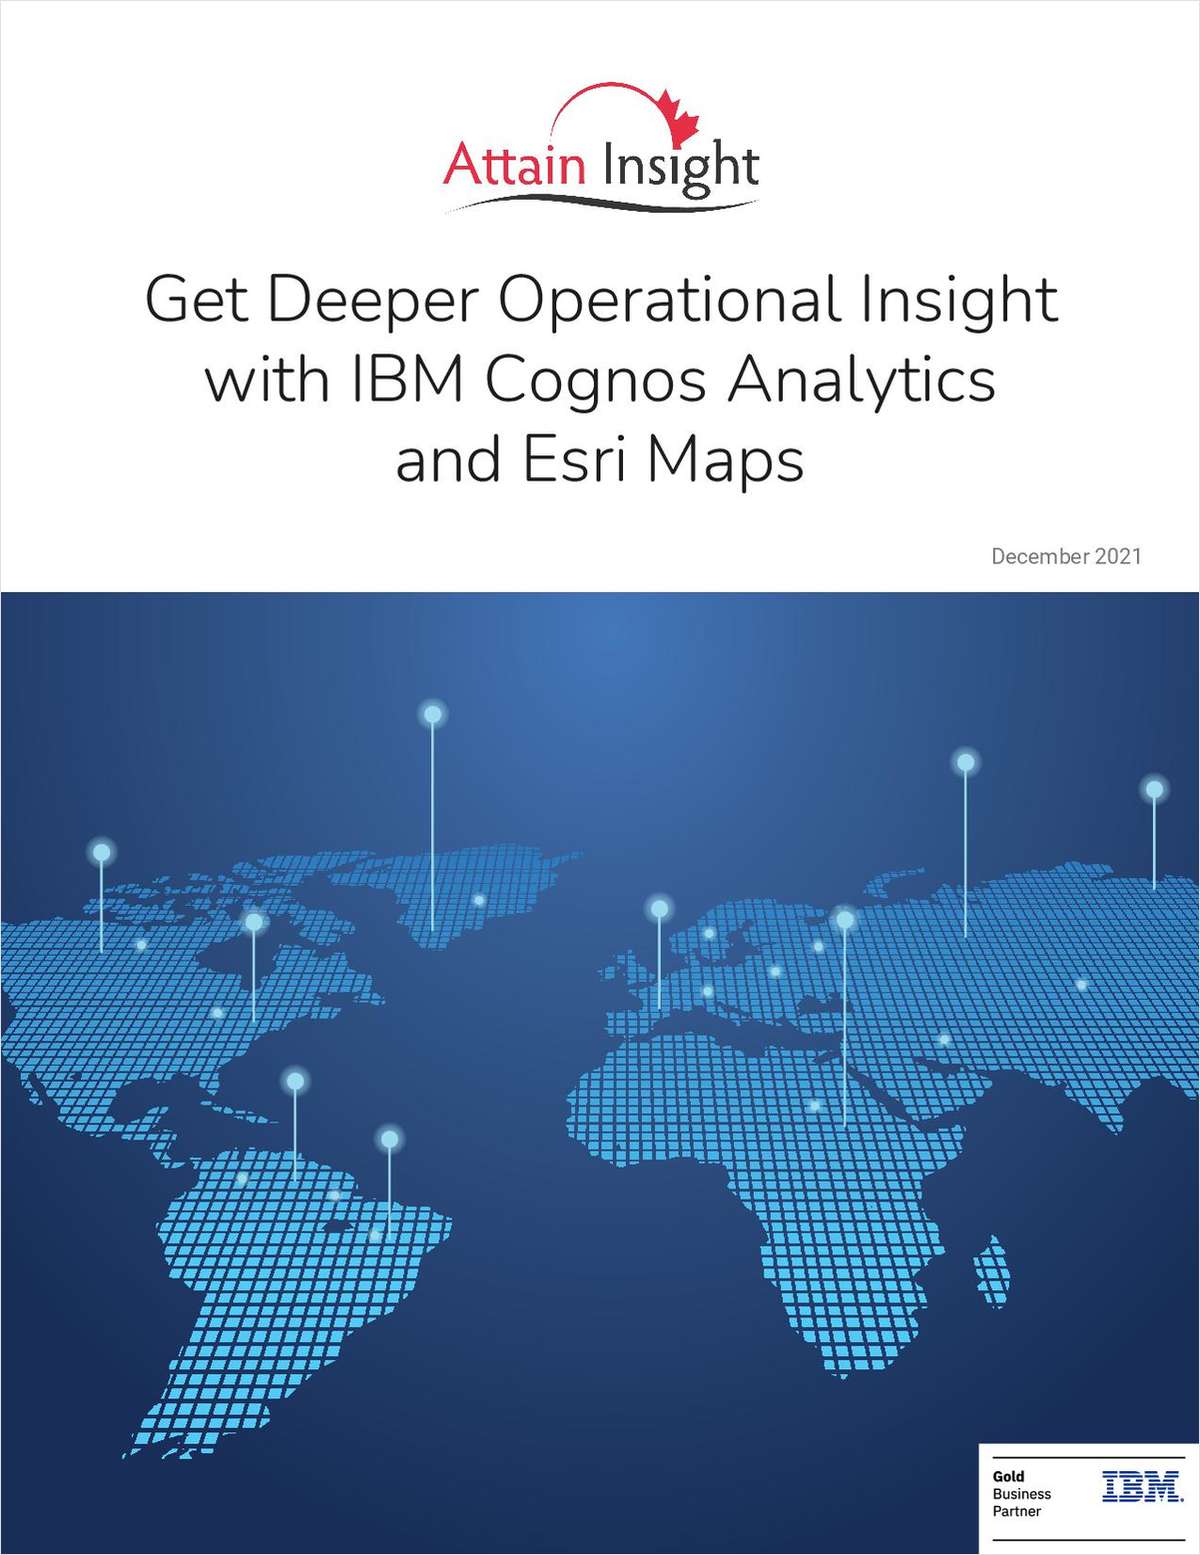 Get Deeper Operational Insight with IBM Cognos Analytics and Esri Maps